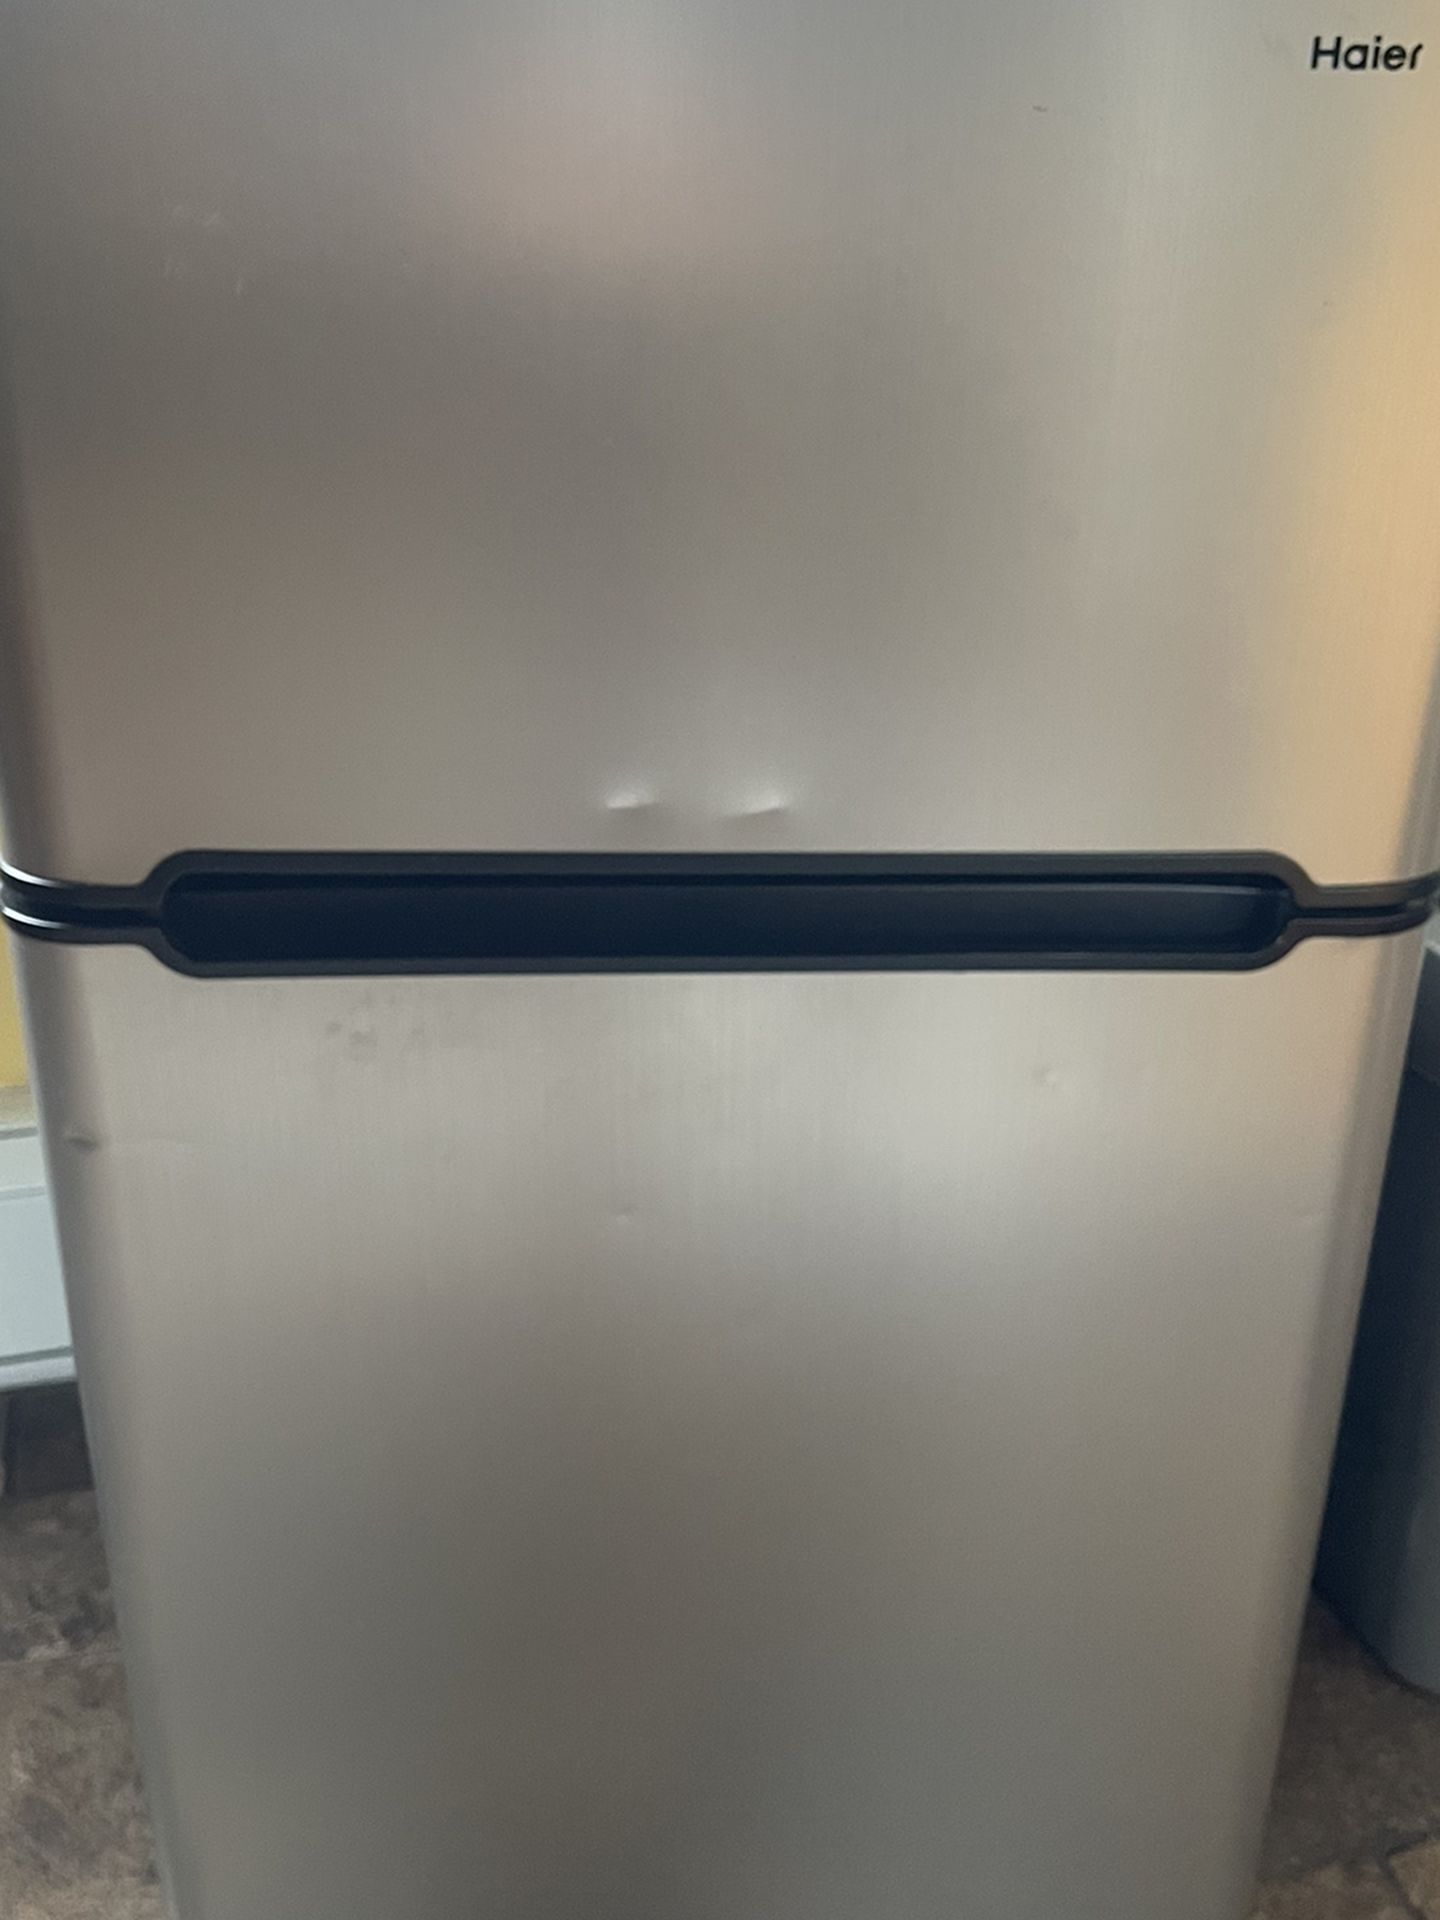 Haier Mini Refrigerator Freezer Combo